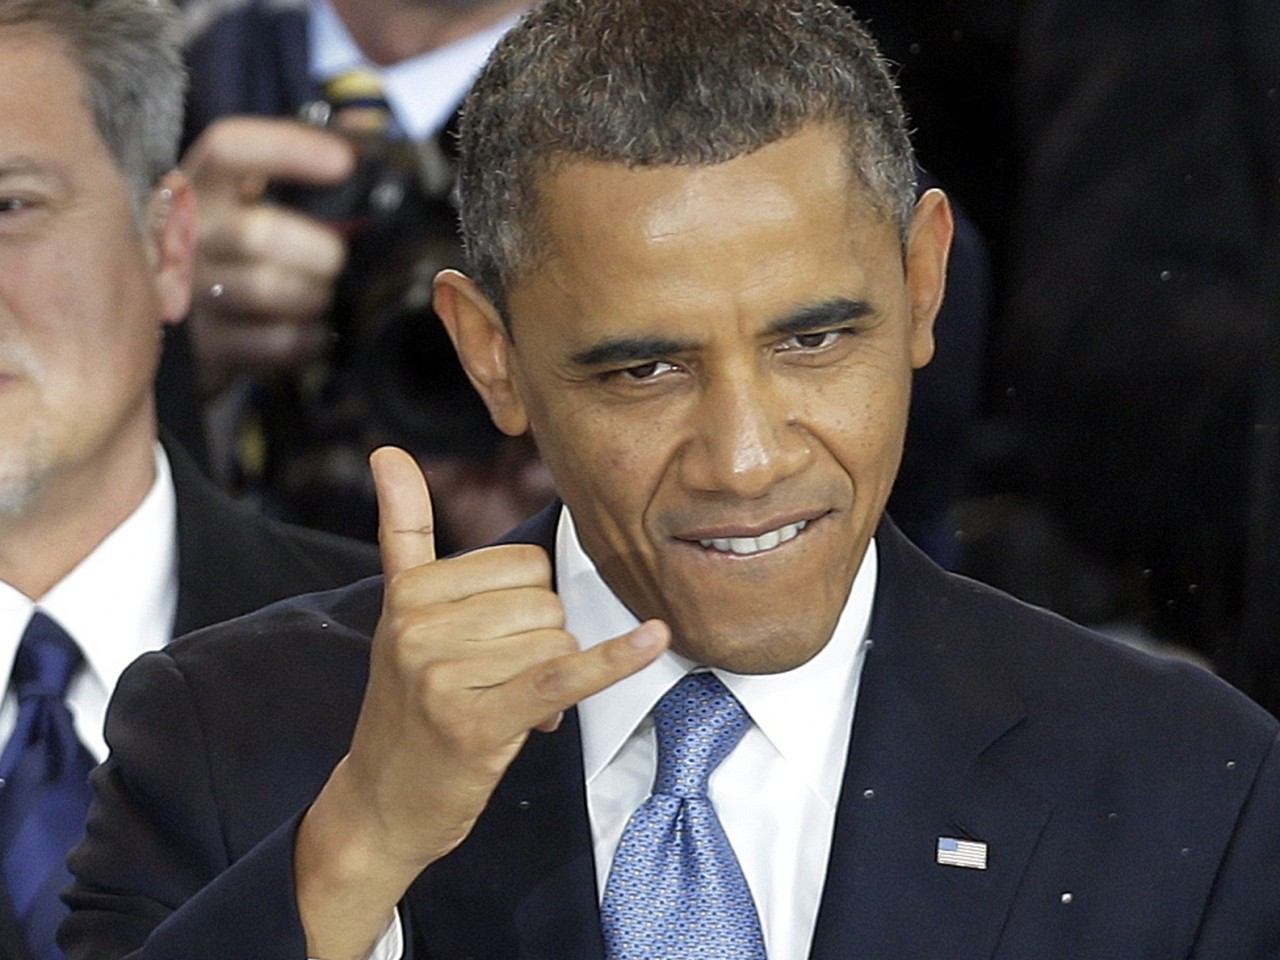 President Obama To Attend 2015 Global Entrepreneurship Summit In His Fatherland, Kenya